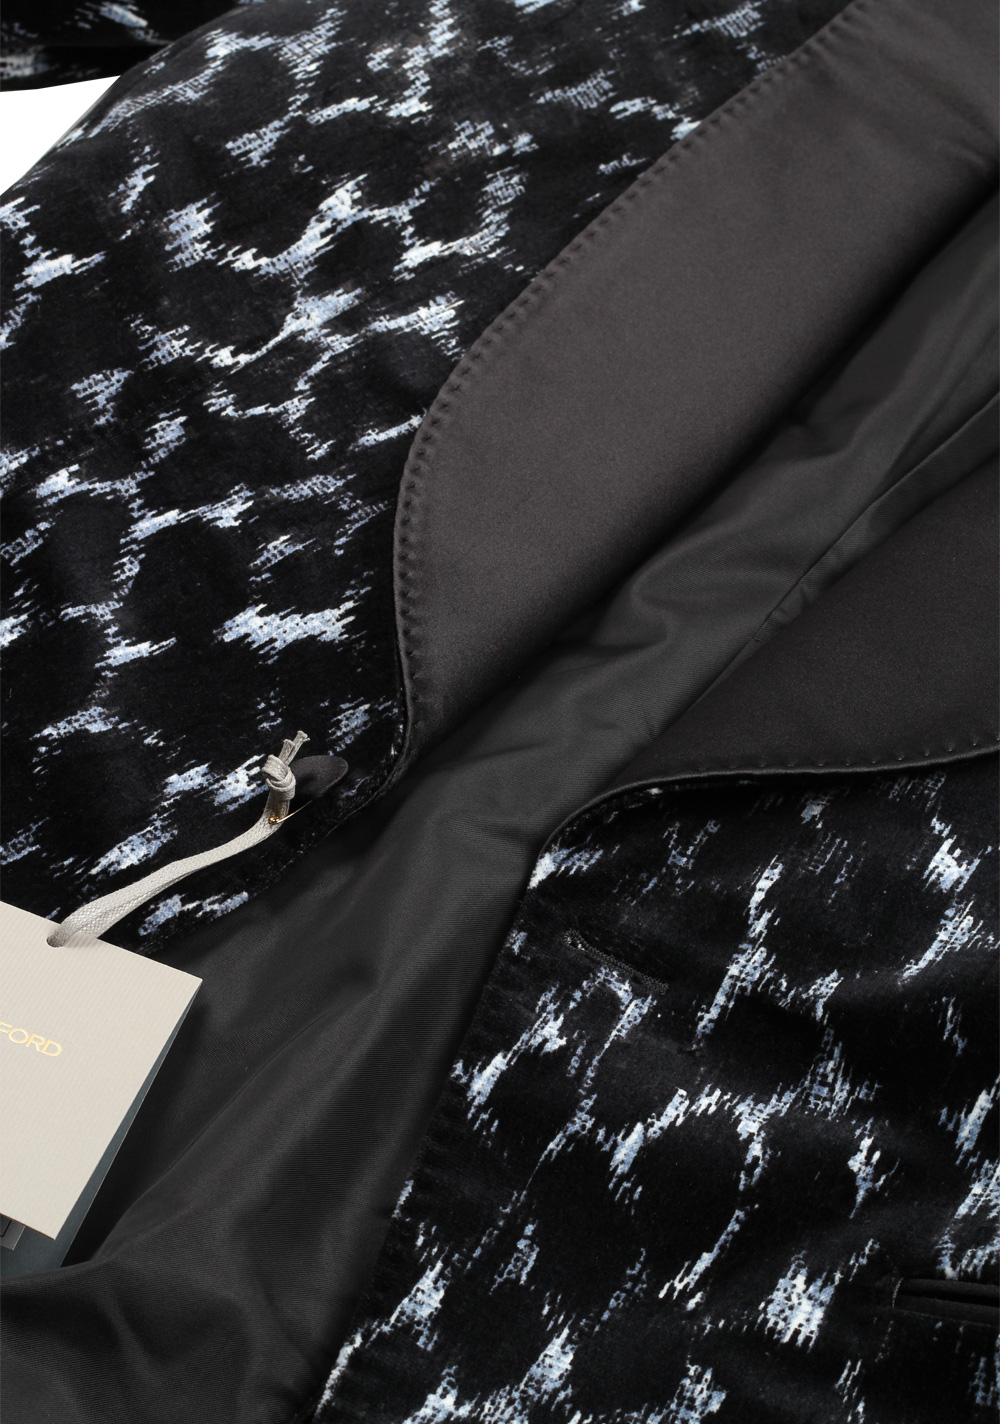 TOM FORD Shelton Black Shawl Collar Sport Coat Tuxedo Dinner Jacket Size 48 / 38R U.S. | Costume Limité